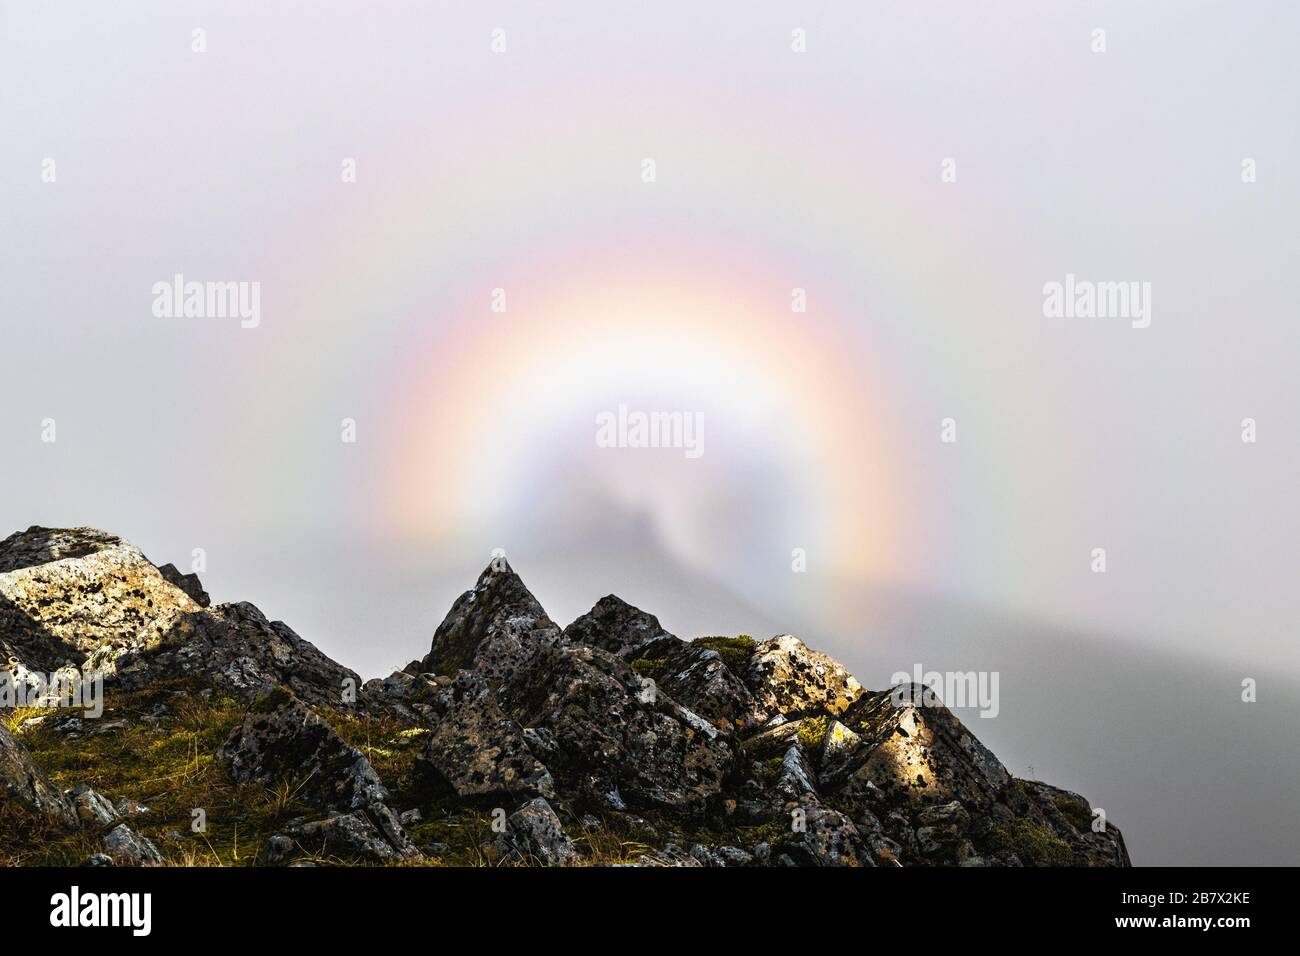 Glory rainbow, natural phenomenon, on a mountain top in dense fog in Glen Coe, Scotland. Stock Photo